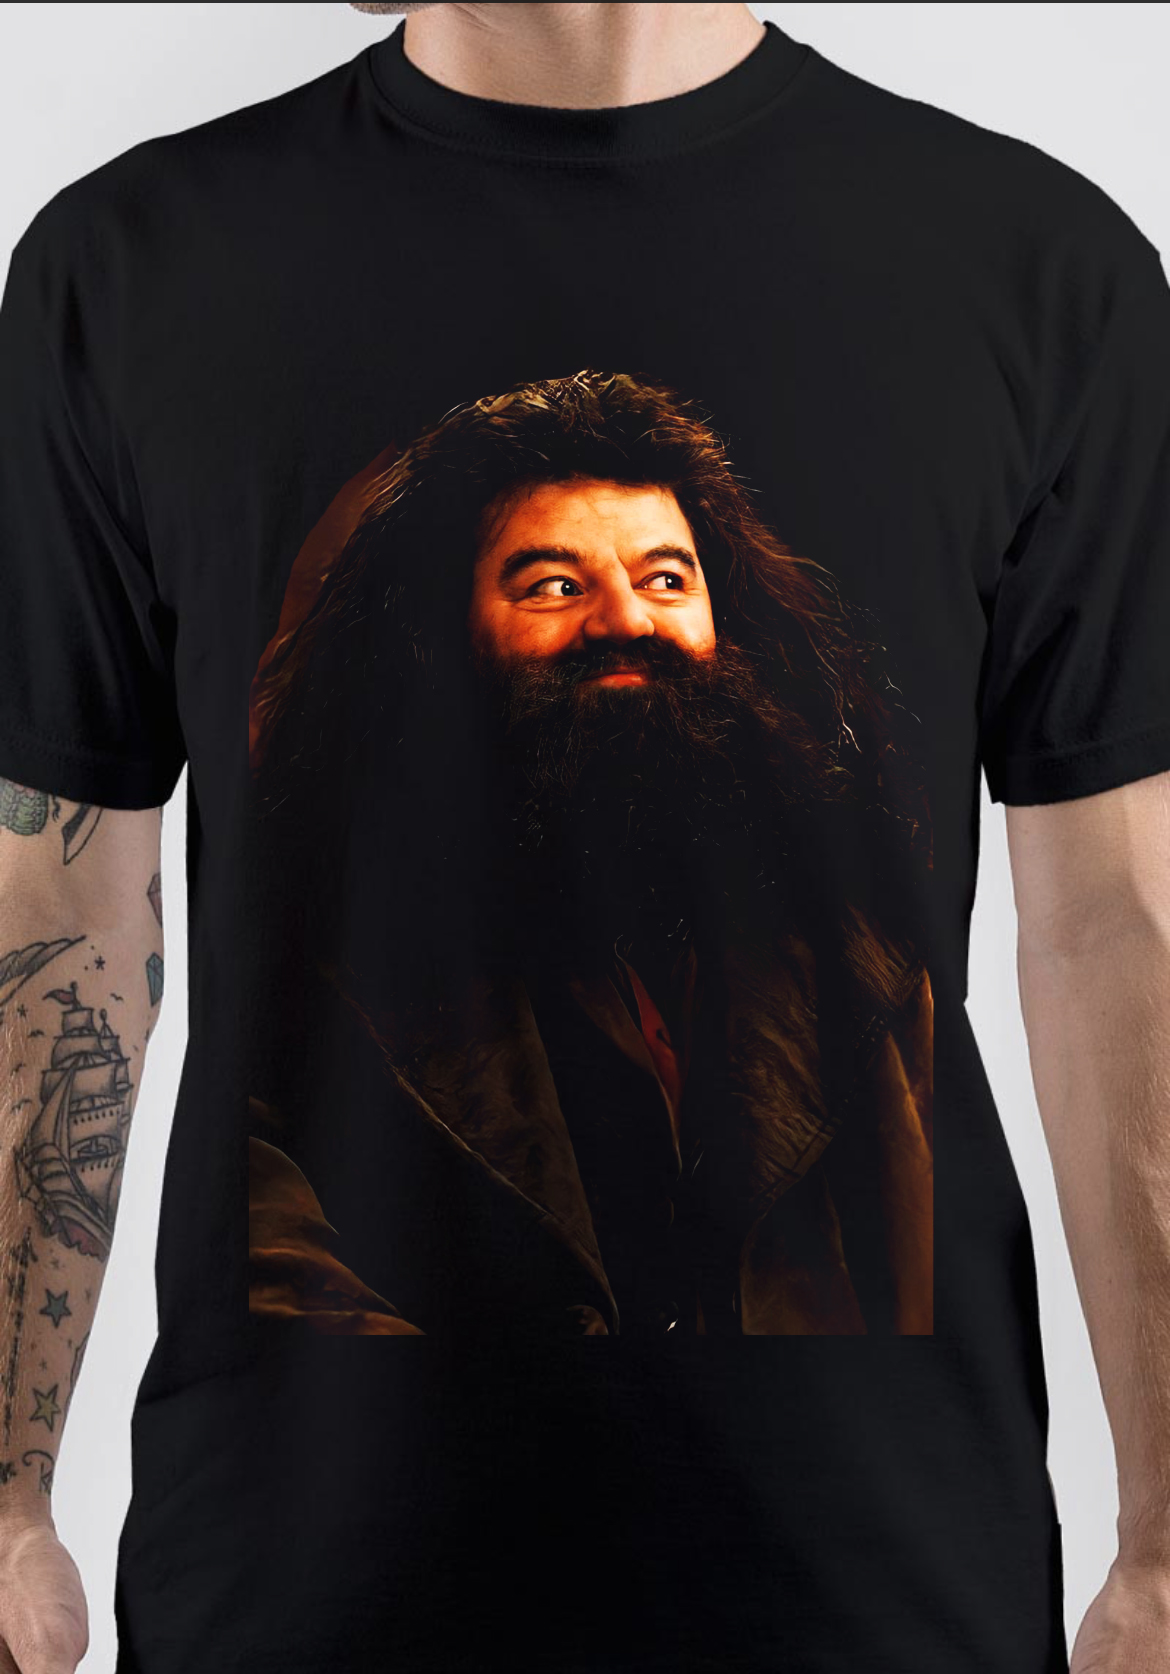 Rubeus Hagrid T-Shirt And Merchandise